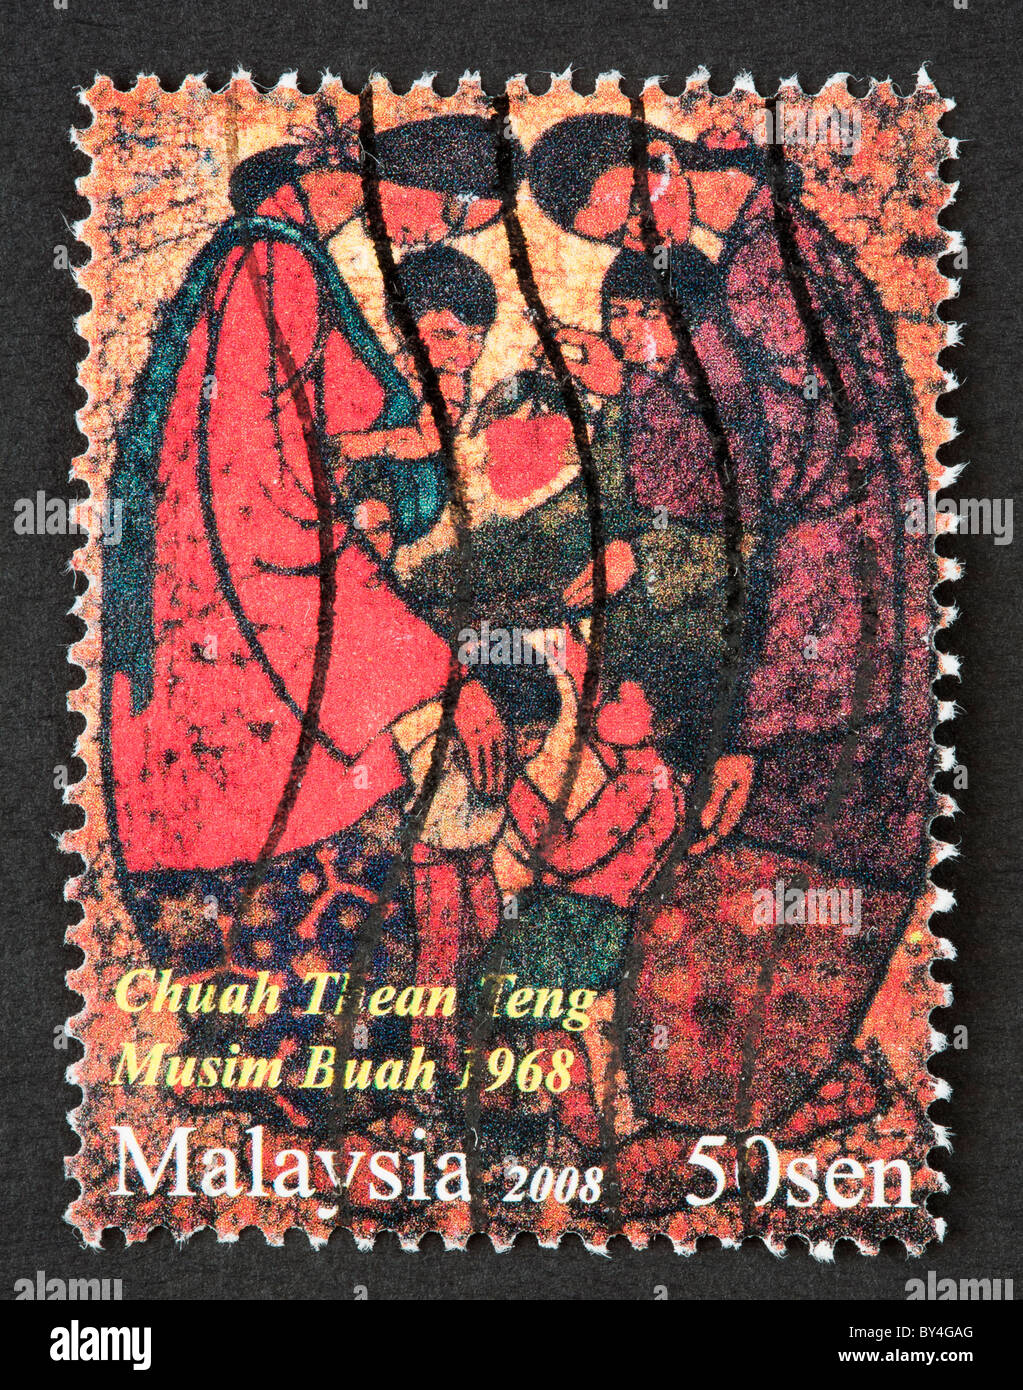 Malaysian postage stamp Stock Photo